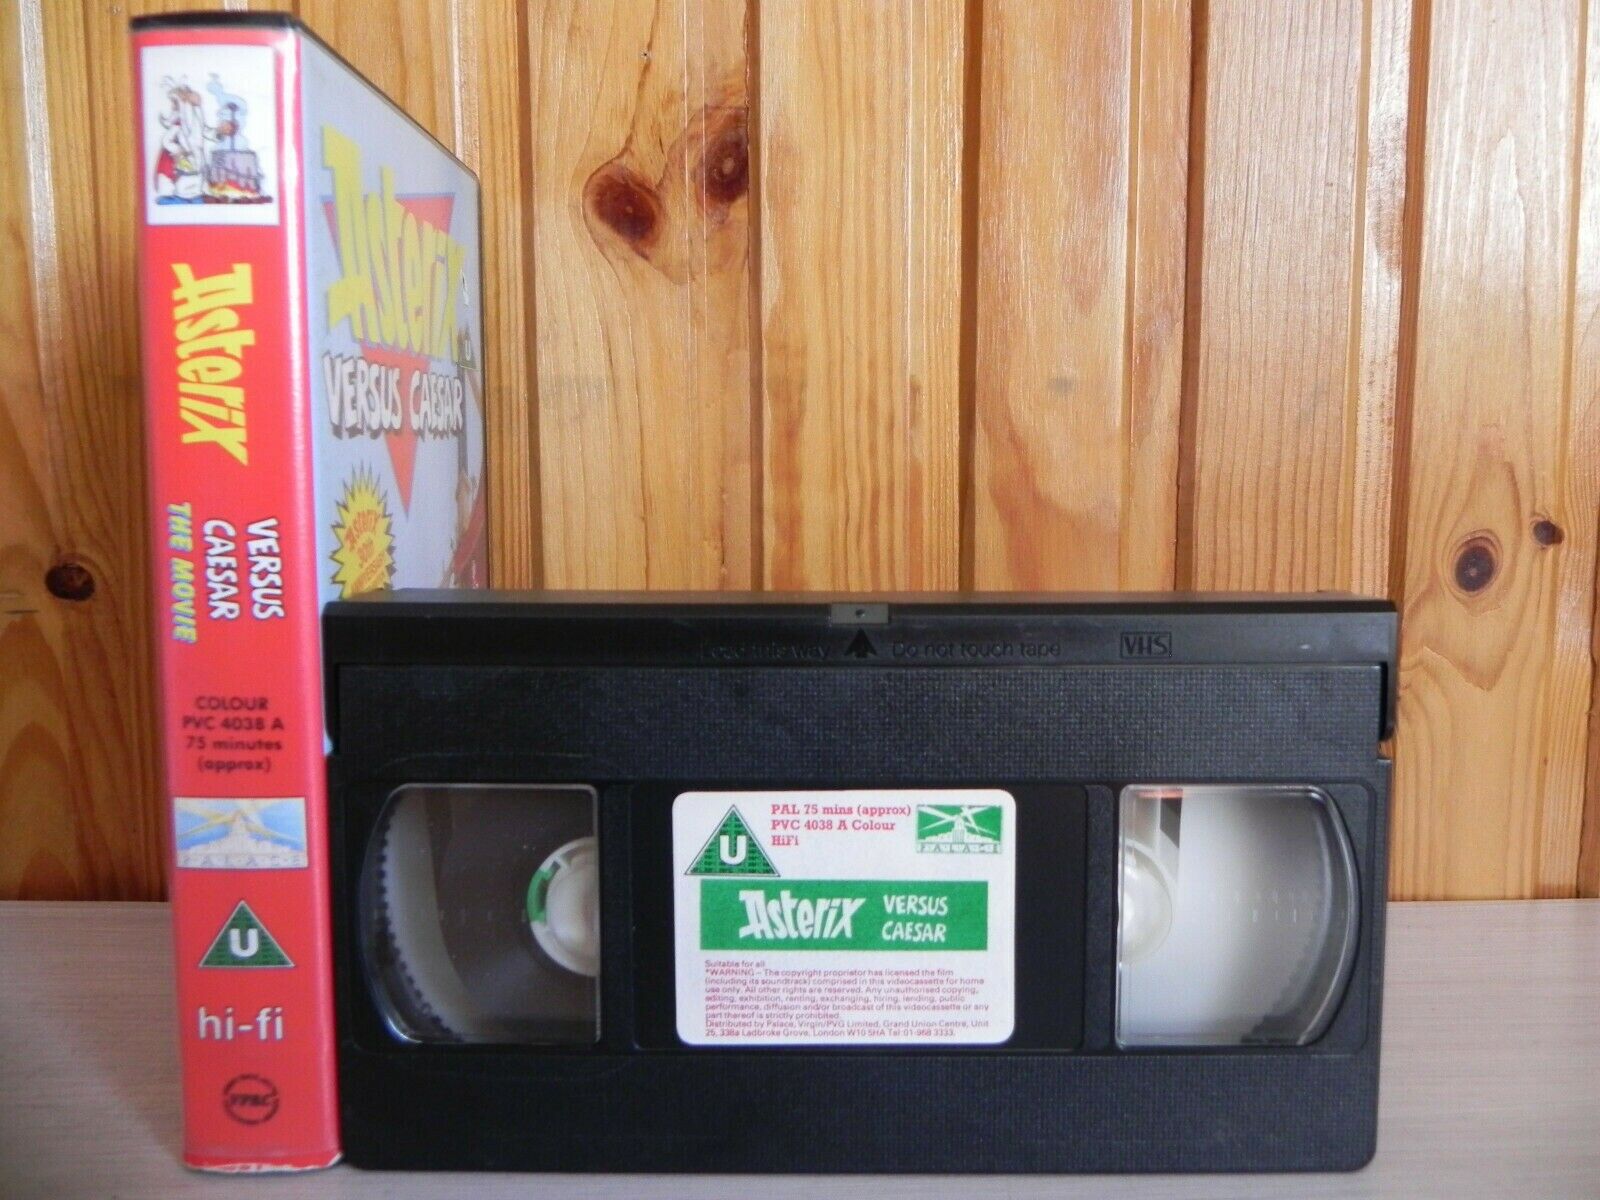 Asterix Versus Caesar - Asterix 30th Anniversary Limited Edition - Retro - VHS-